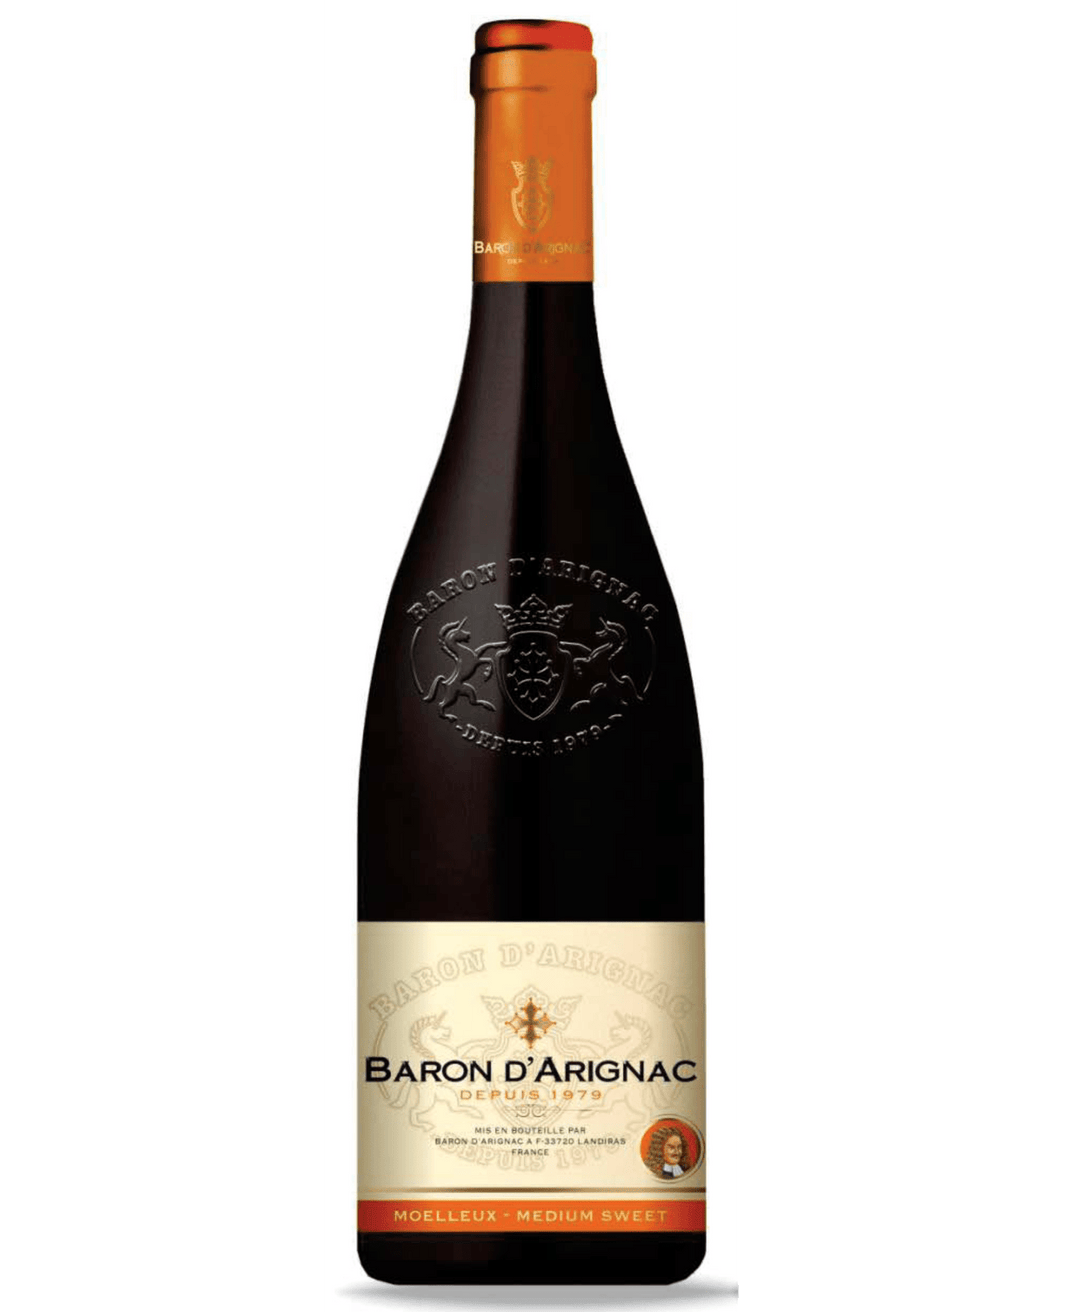 Baron D'Arignac Depuis Modelleux Medium Sweet Red 12% wine - 750ml